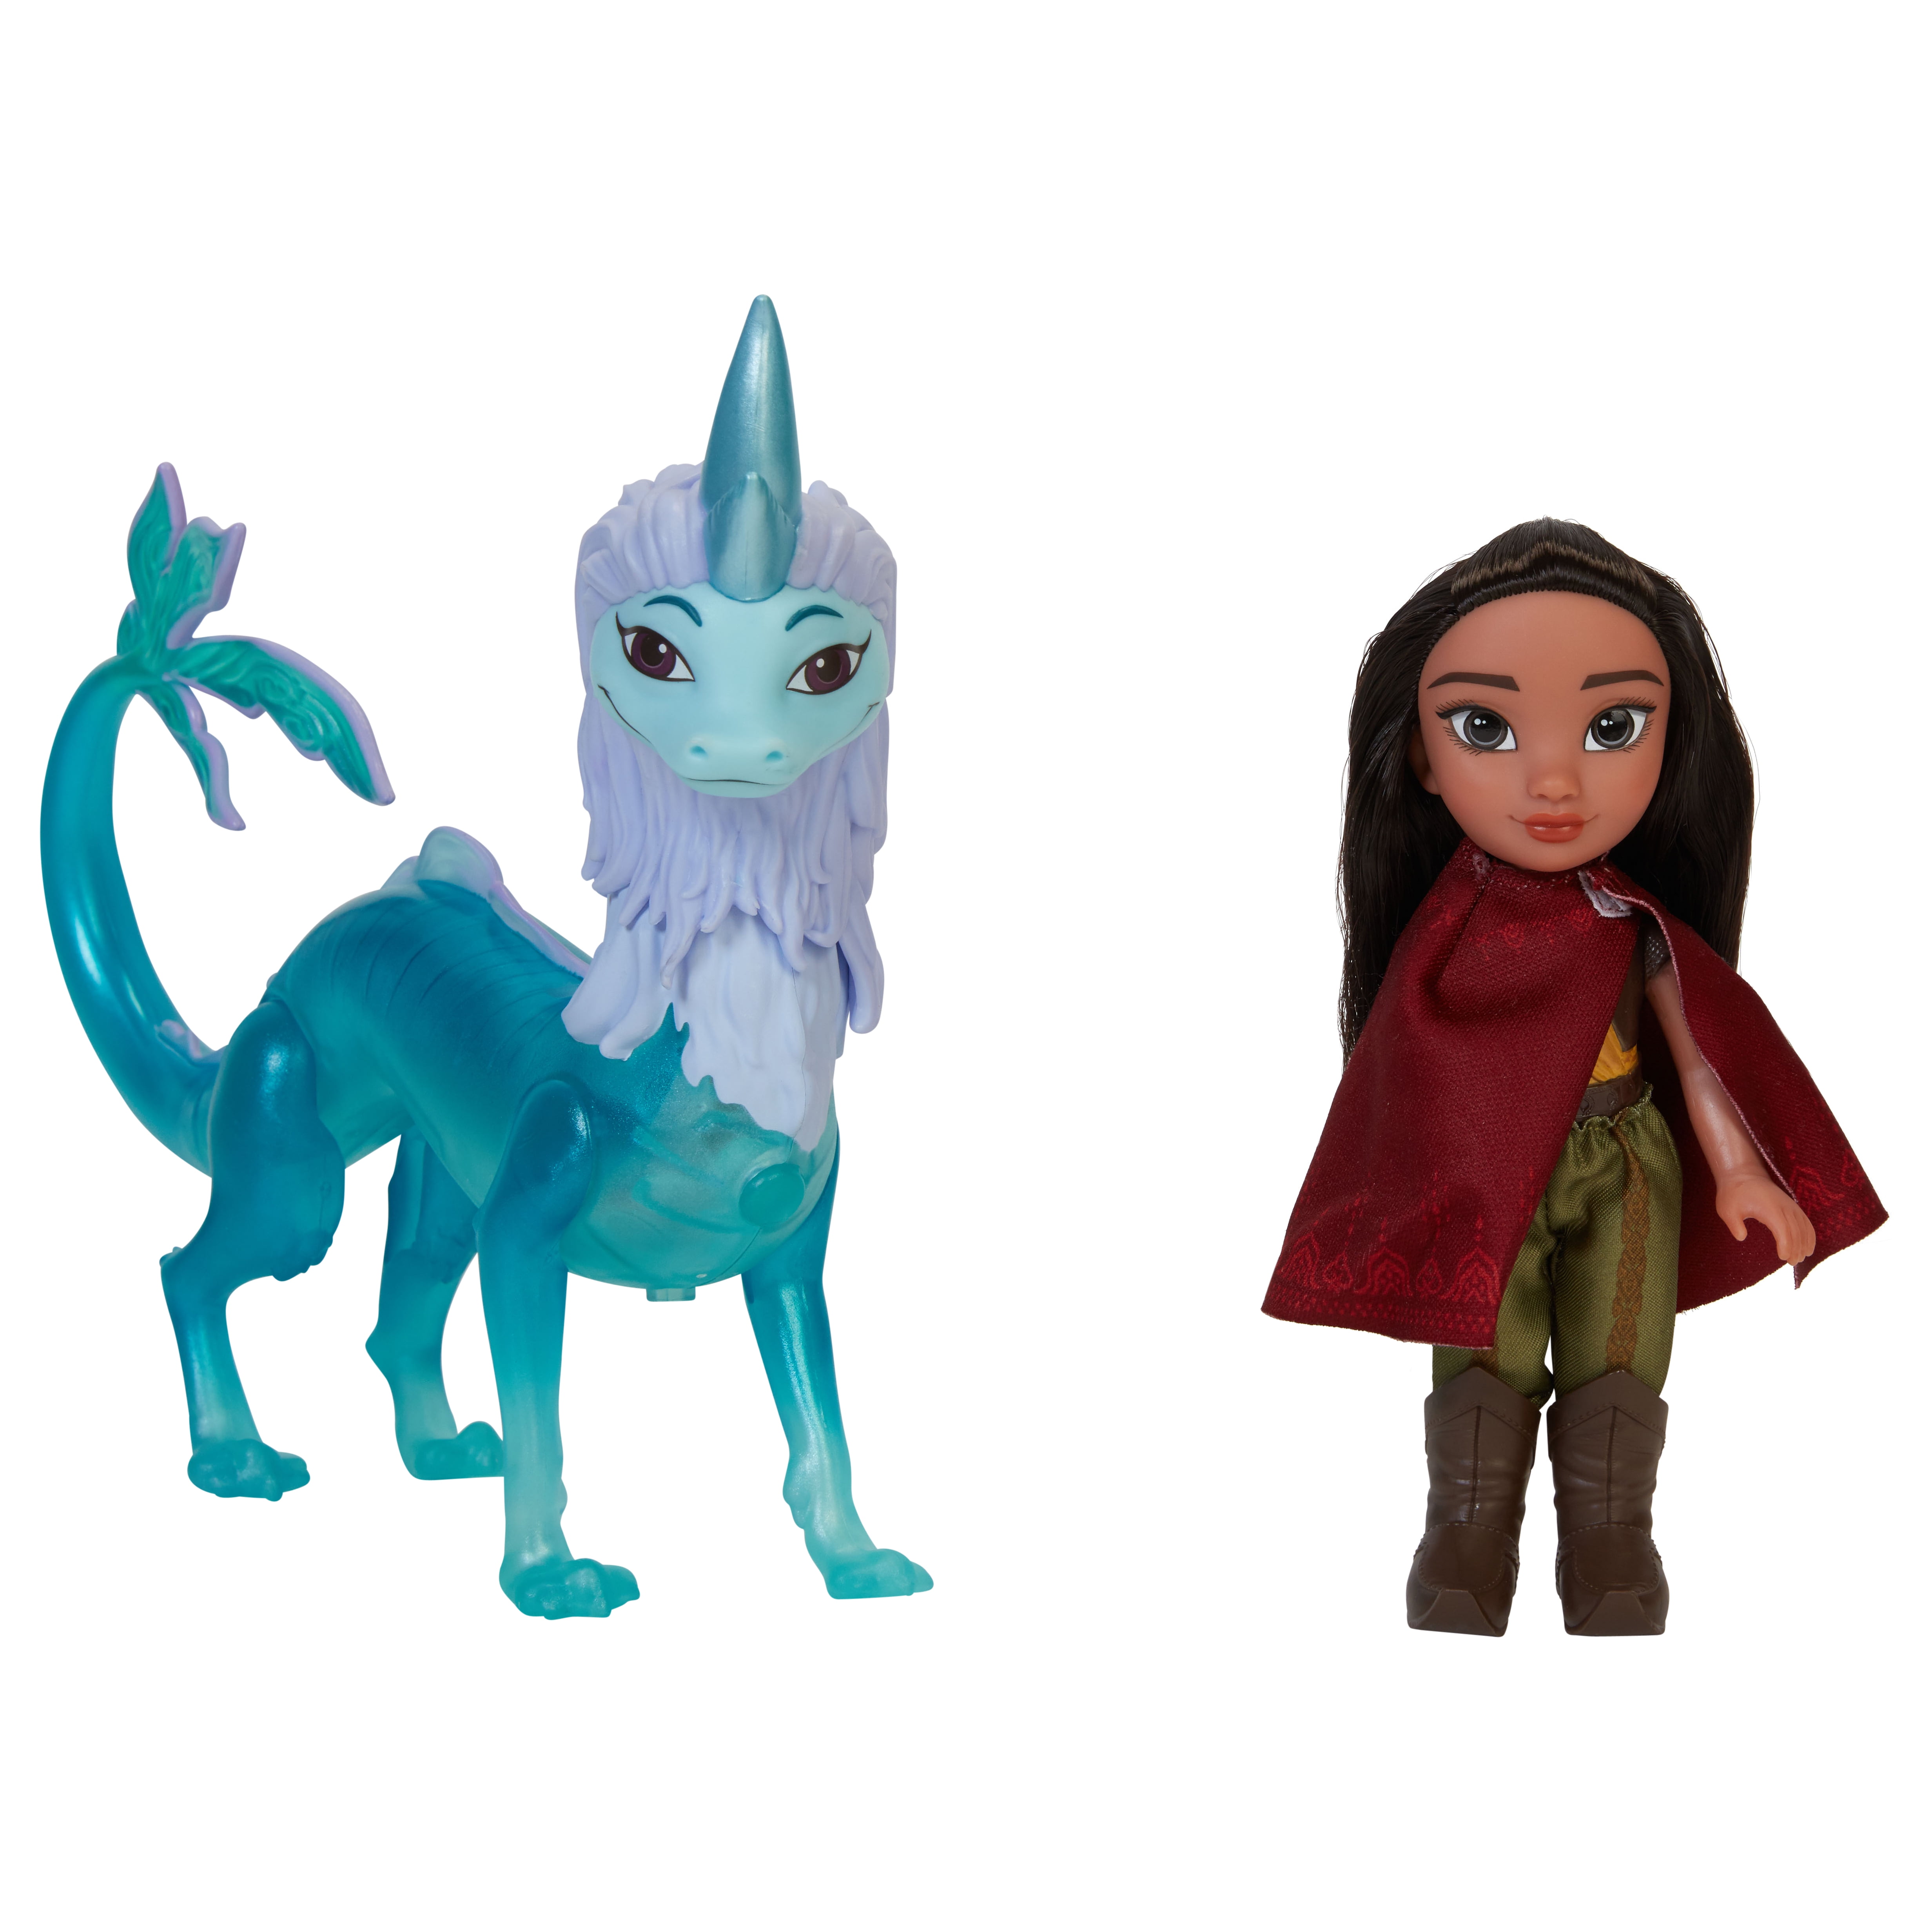 Details about   Disney Raya and The Last Dragon Plush Kids Toys Figure Model Stuffed Soft Doll 